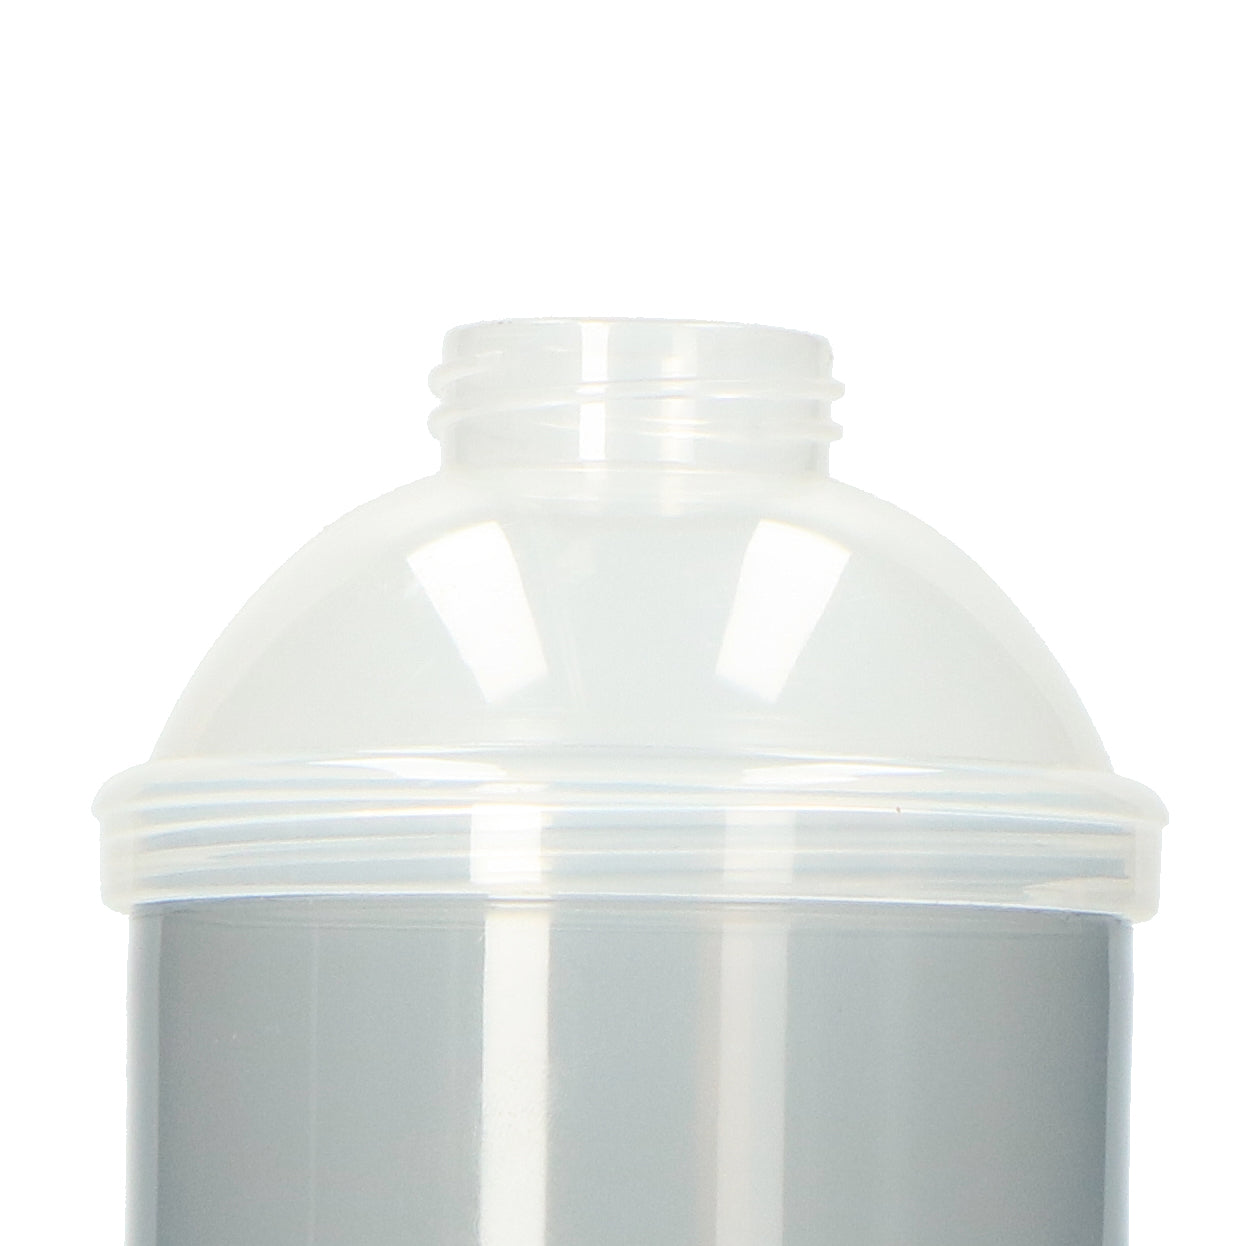 Alecto BF-4 - Milchpulver-Portionierer, weiß/grau